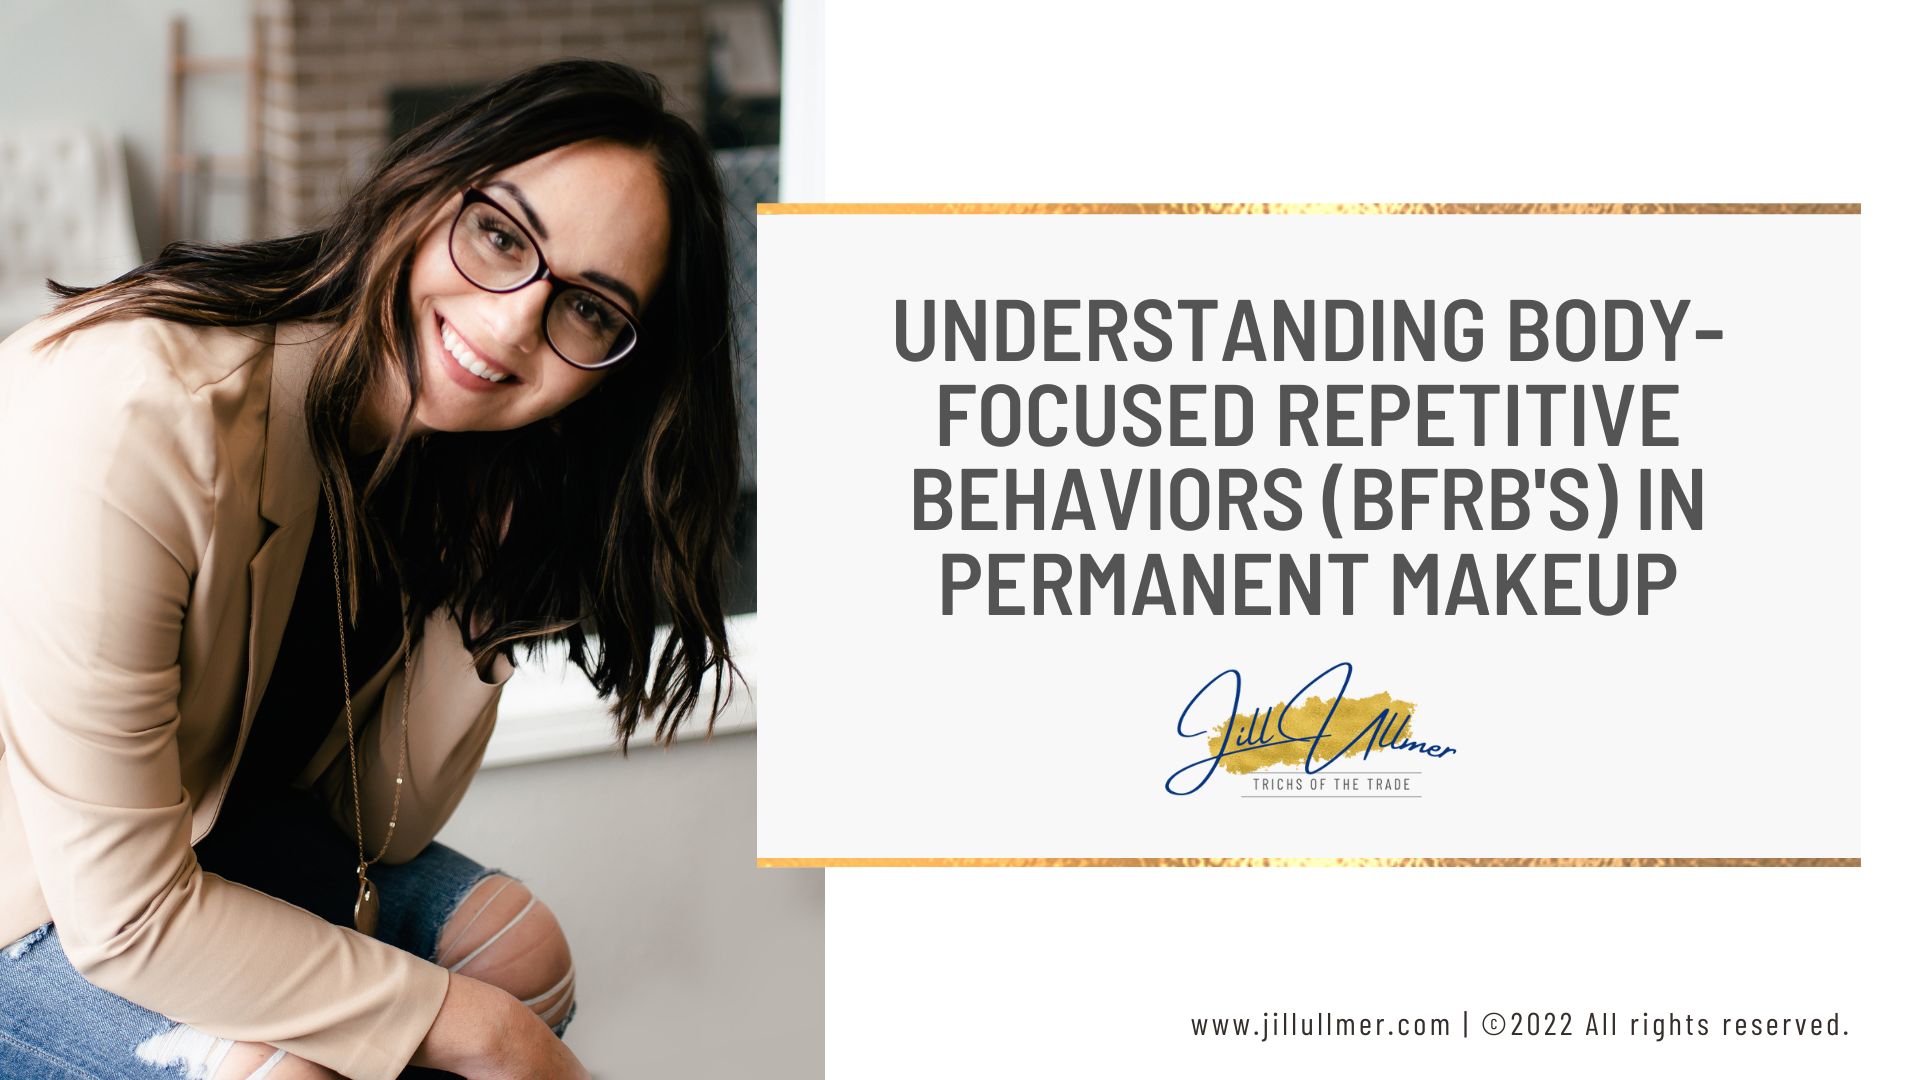 Understanding Body-focused repetitive behaviors (BFRB's) in permanent makeup